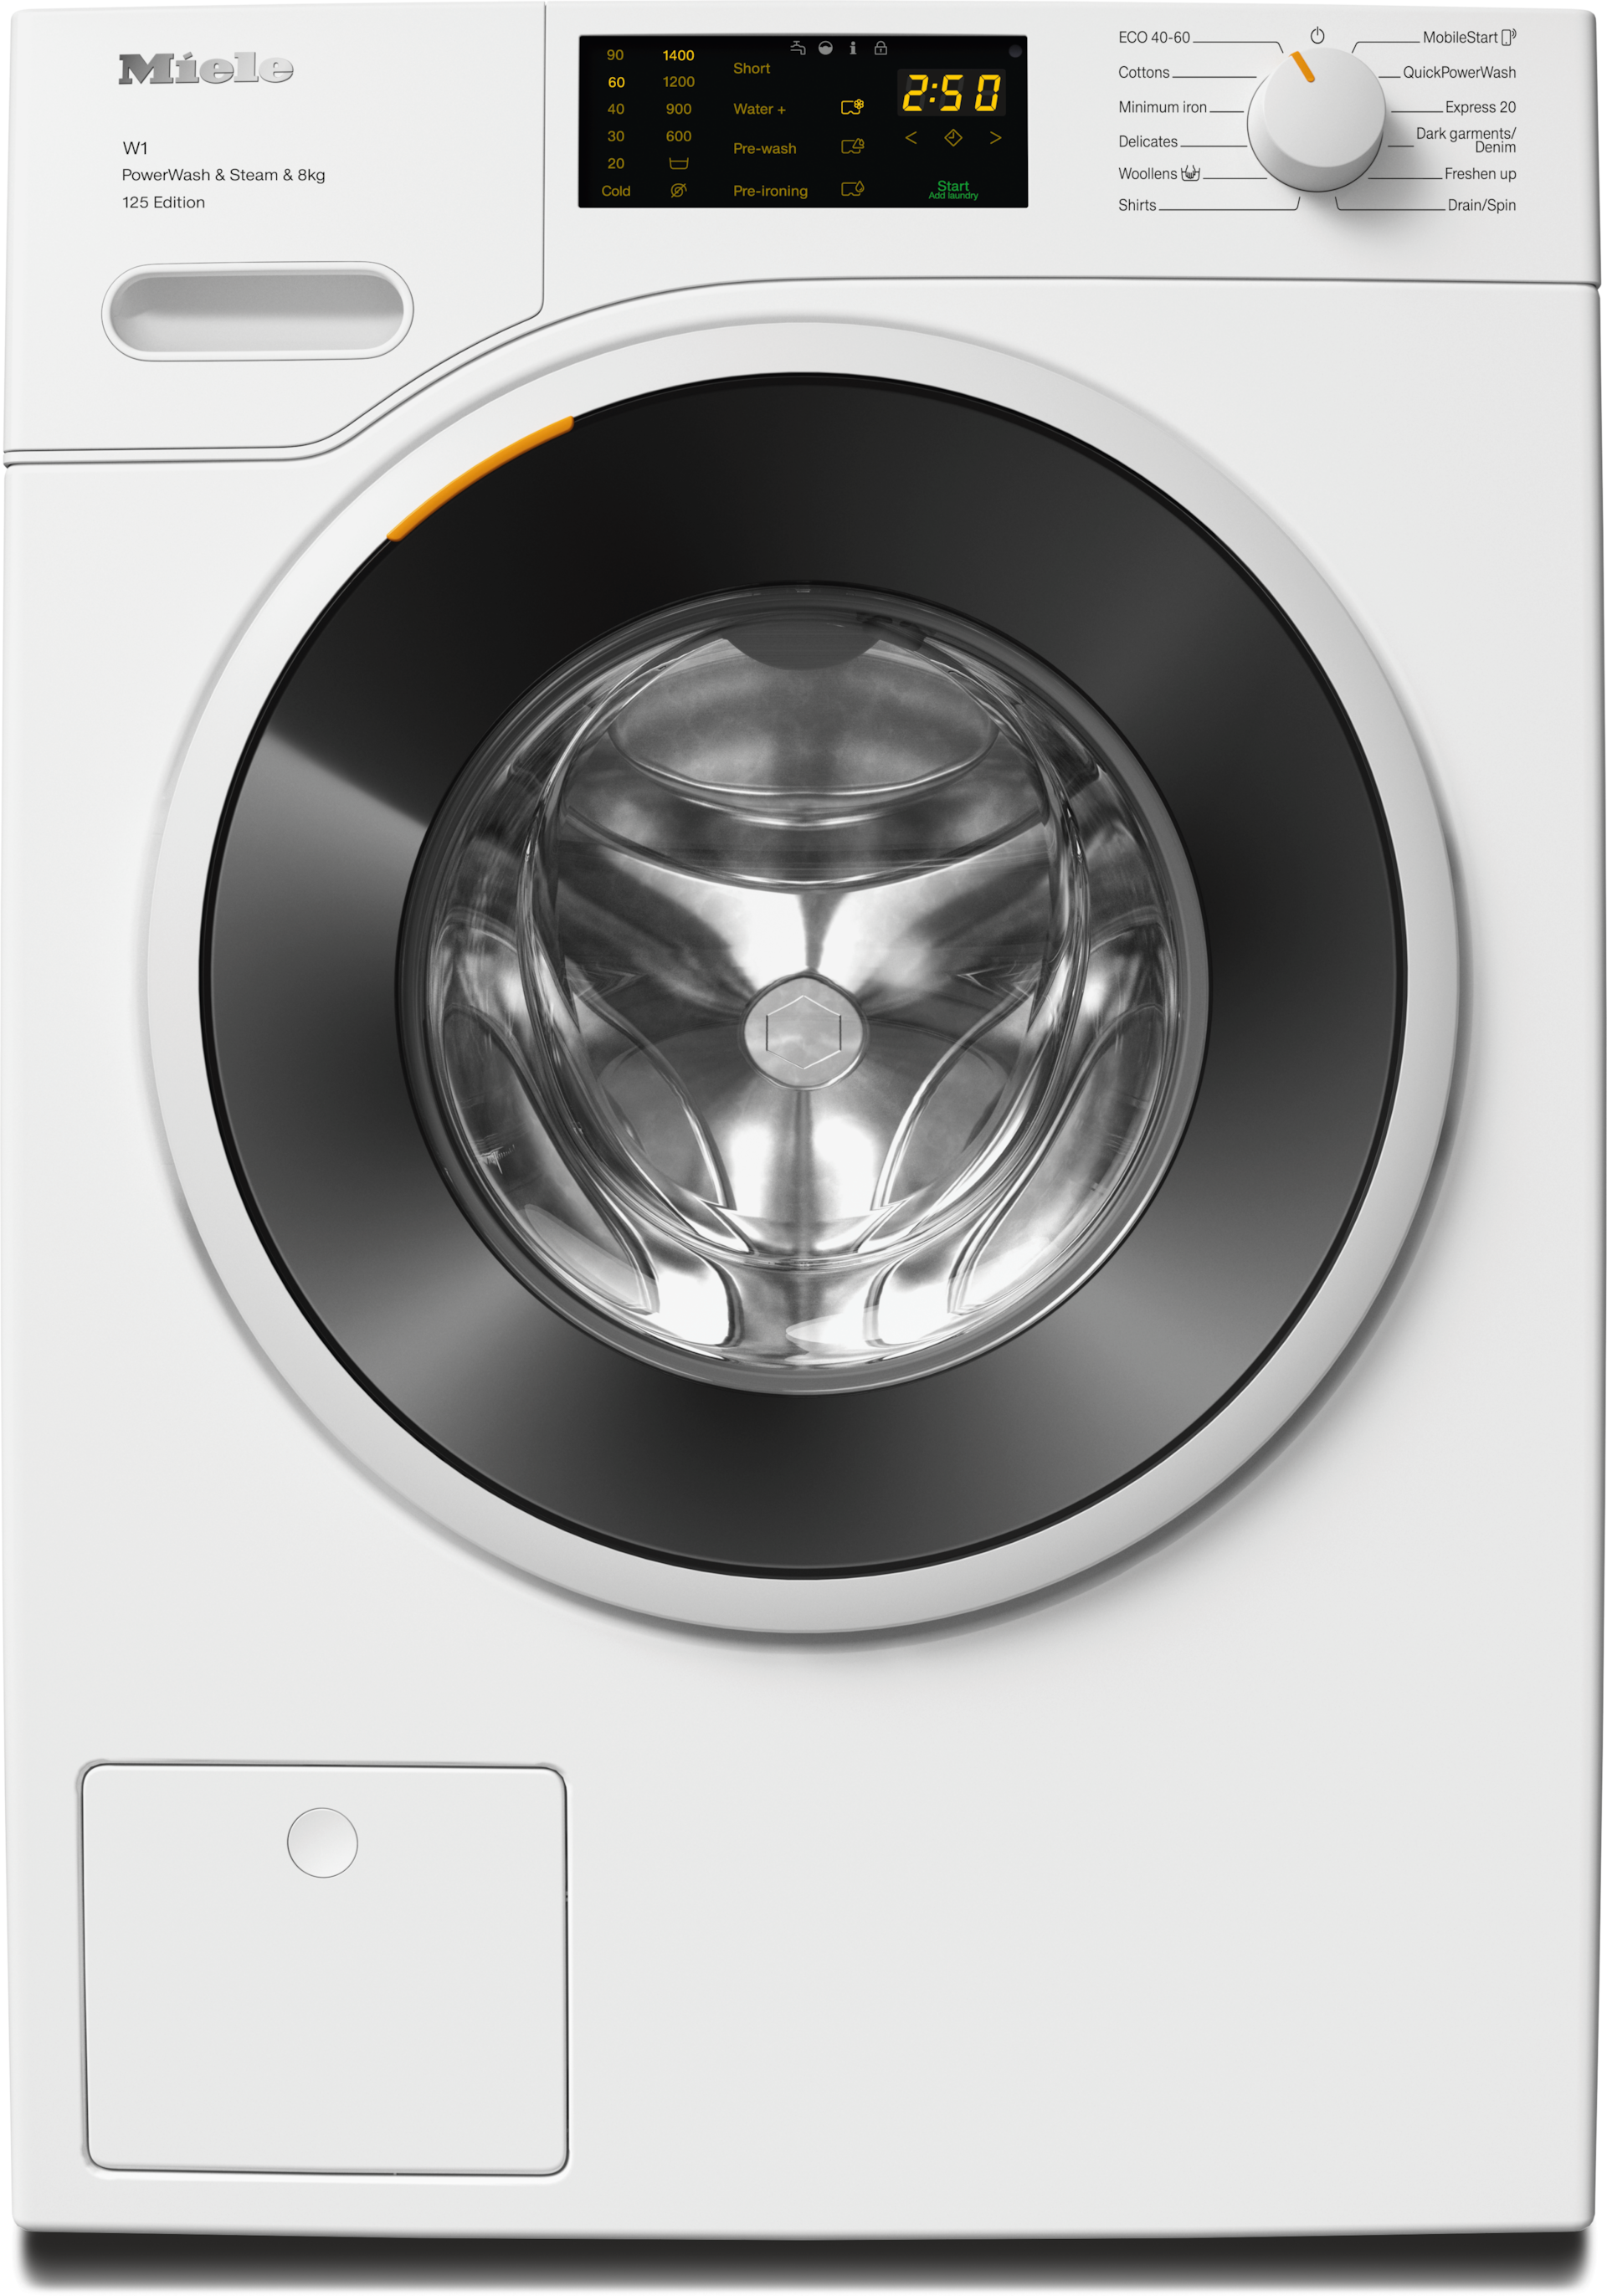 Washing machines - WWB380 WCS 125 Edition Lotus white - 1